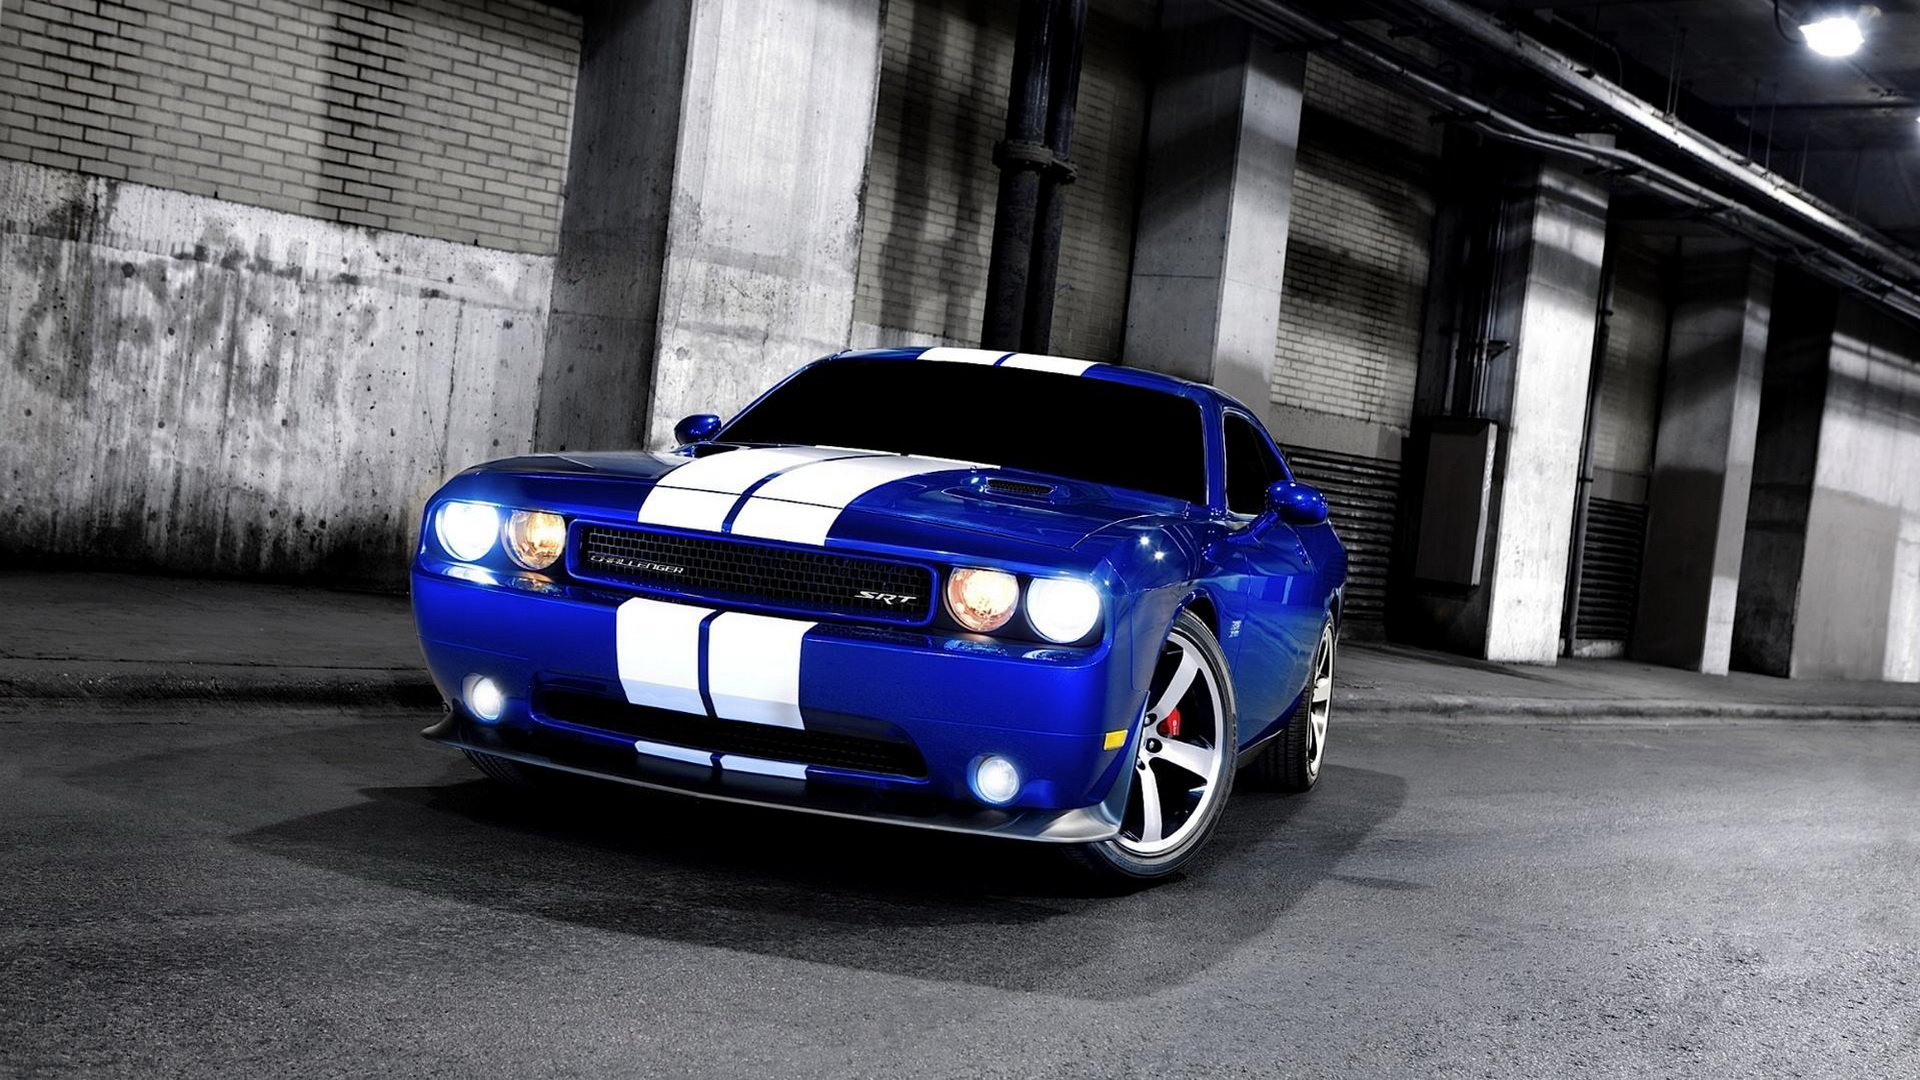 Best Dodge Challenger SRT8 background ID:445881 for High Resolution full hd 1080p desktop